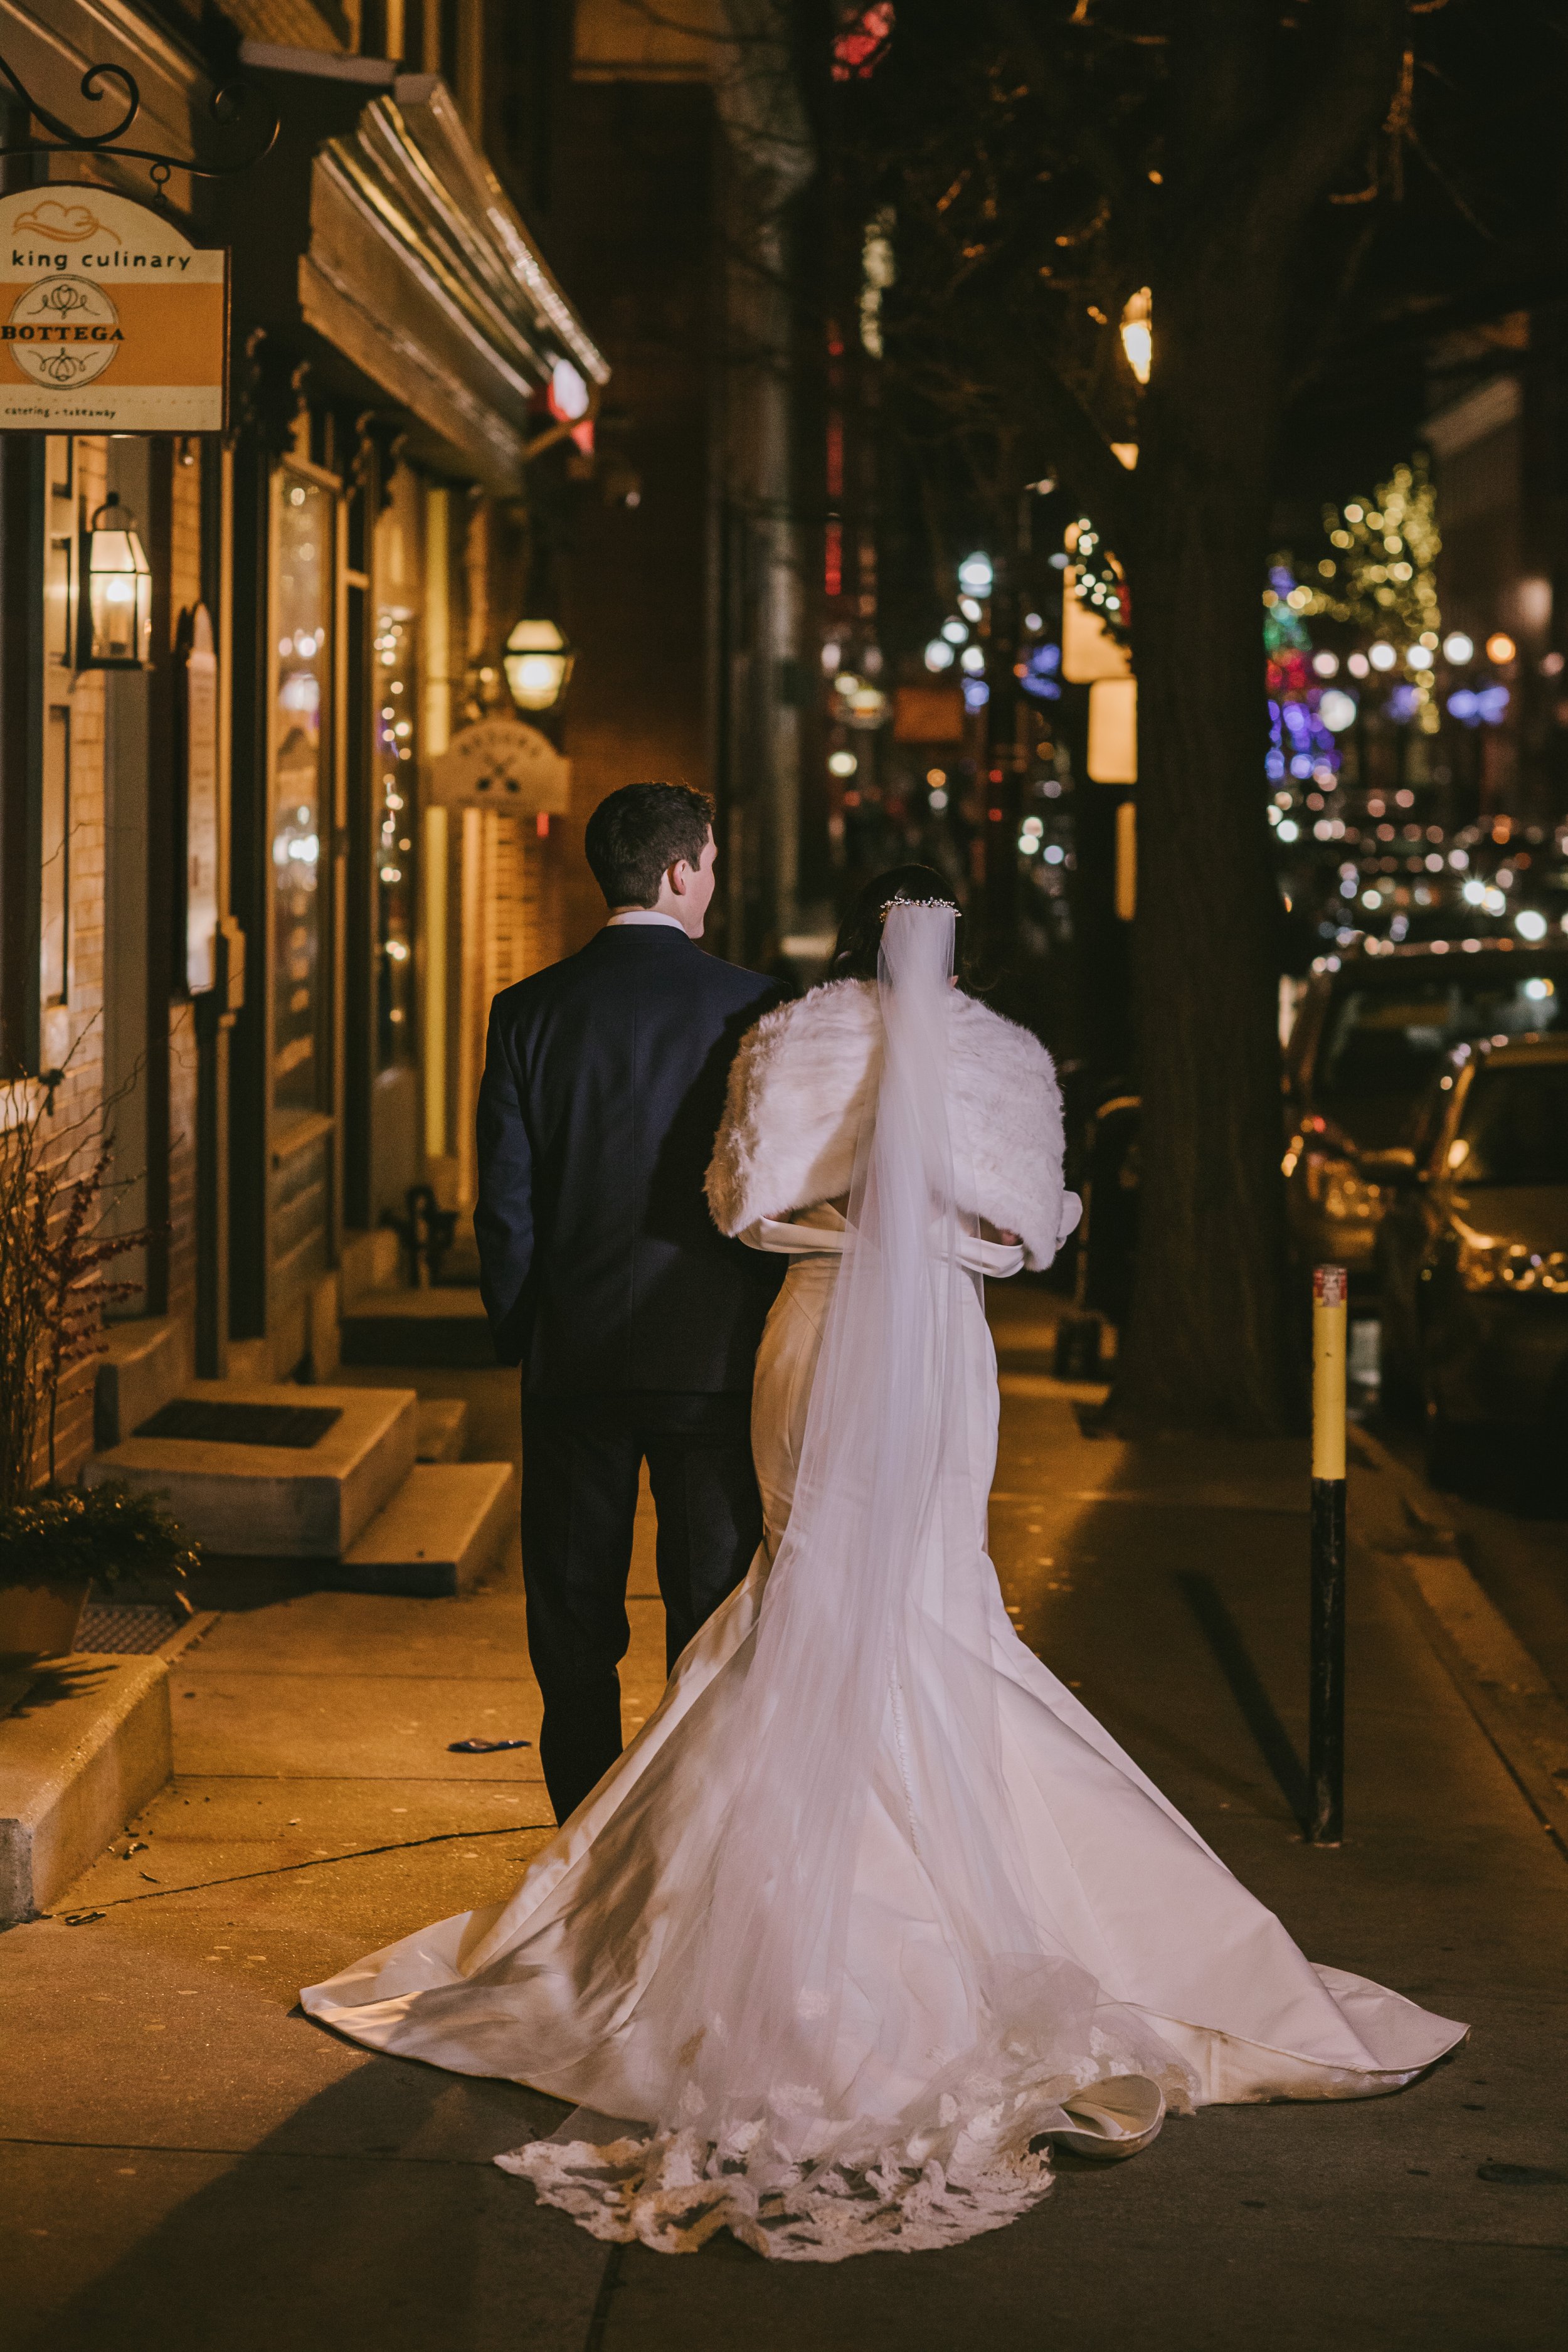 View from behind of bride and groom walking sidewalk at night